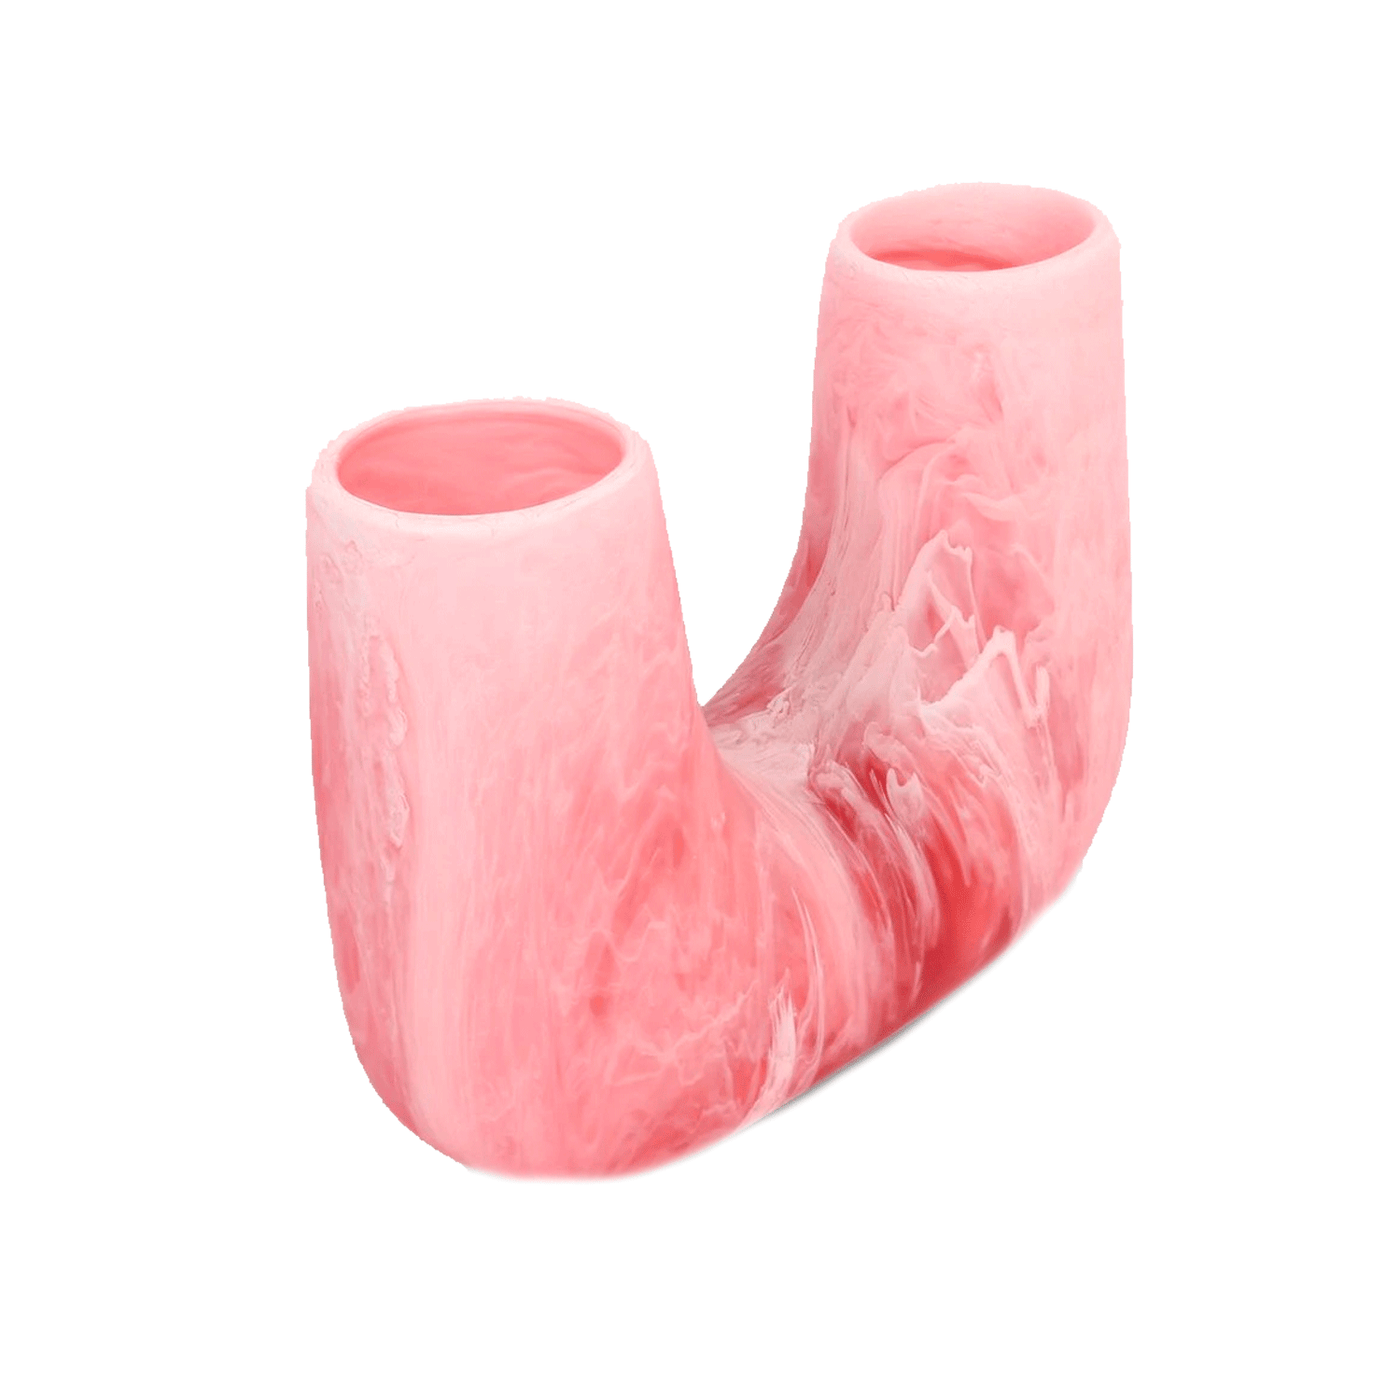 Resin Branch Vase in Pink by Dinosaur Designs